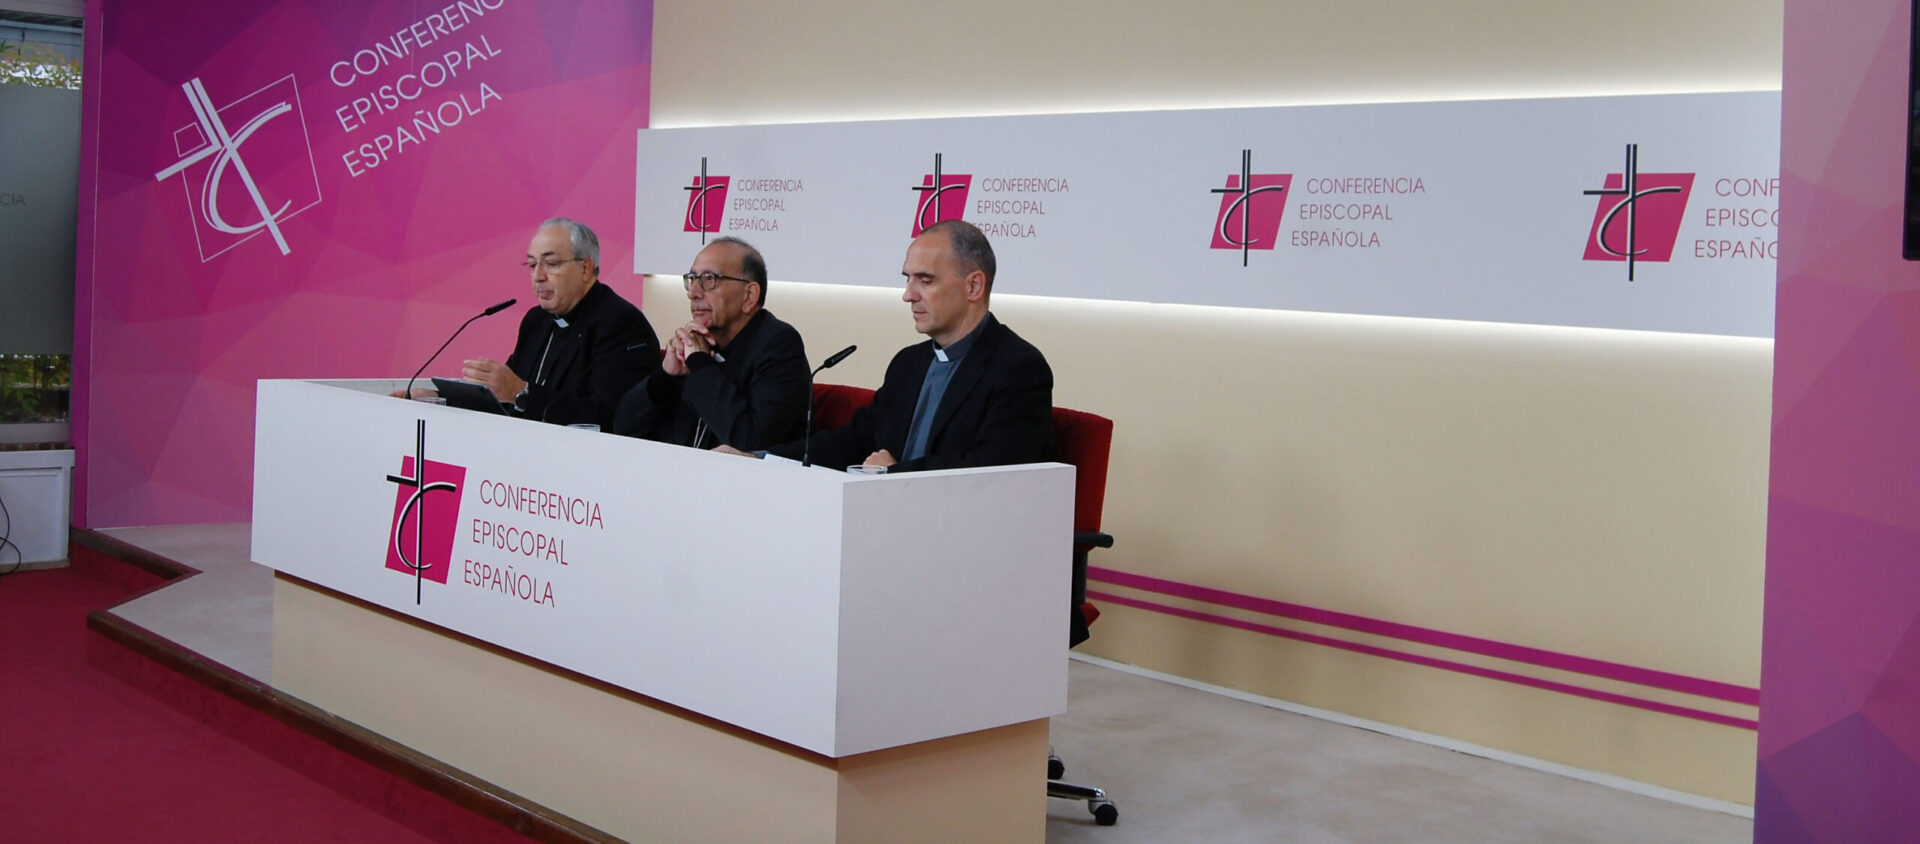 Conférence de presse de la CEE, avec le cardinal Juan Jose Omella au centre | © CEE/Flickr/CC BY-SA 2.0 Deed 